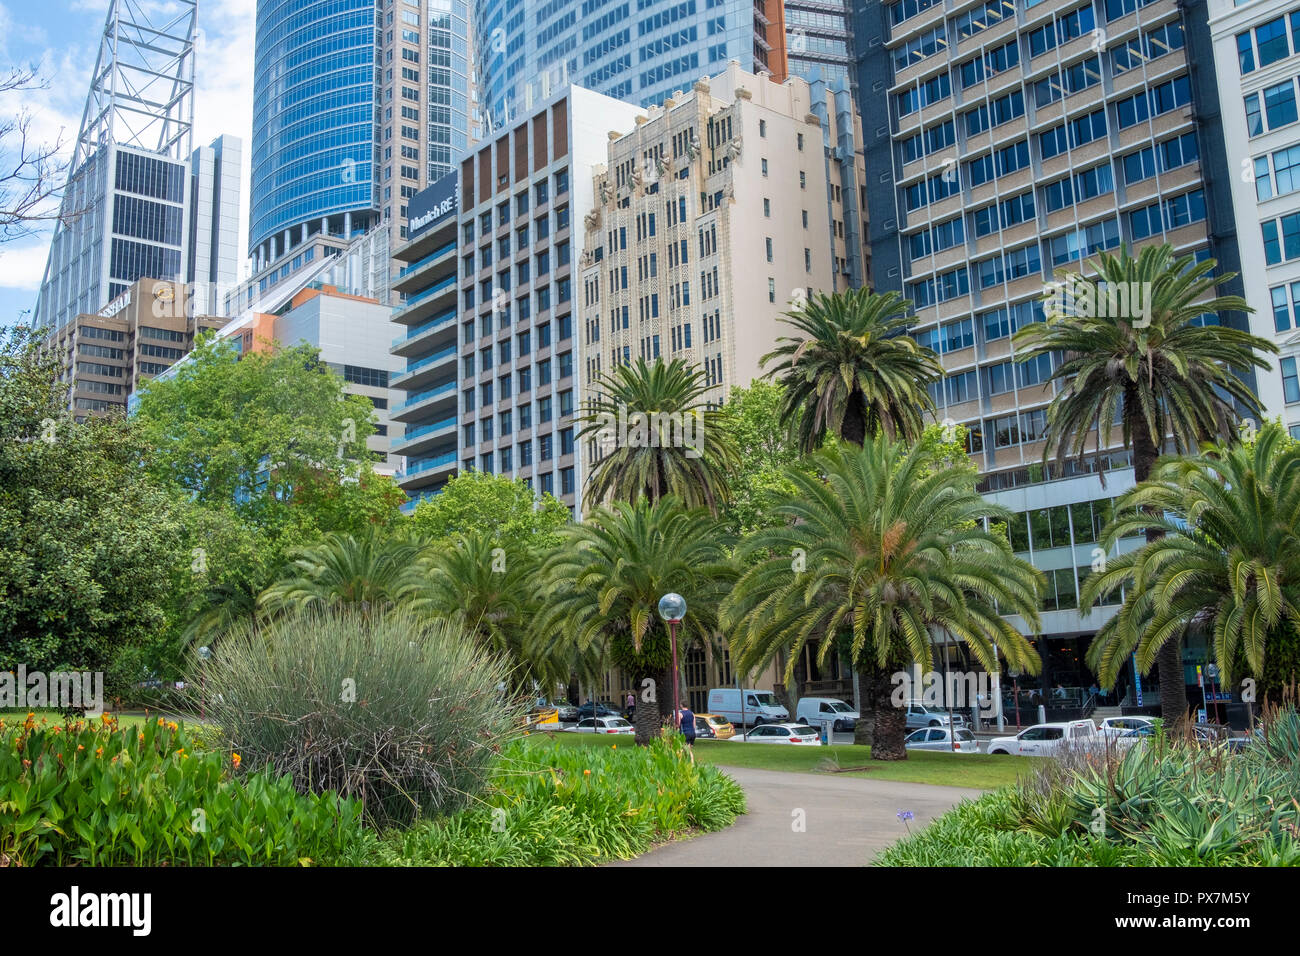 Le palme del giardino botanico reale e grattacieli in Macquarie Street, Sydney, Australia Foto Stock